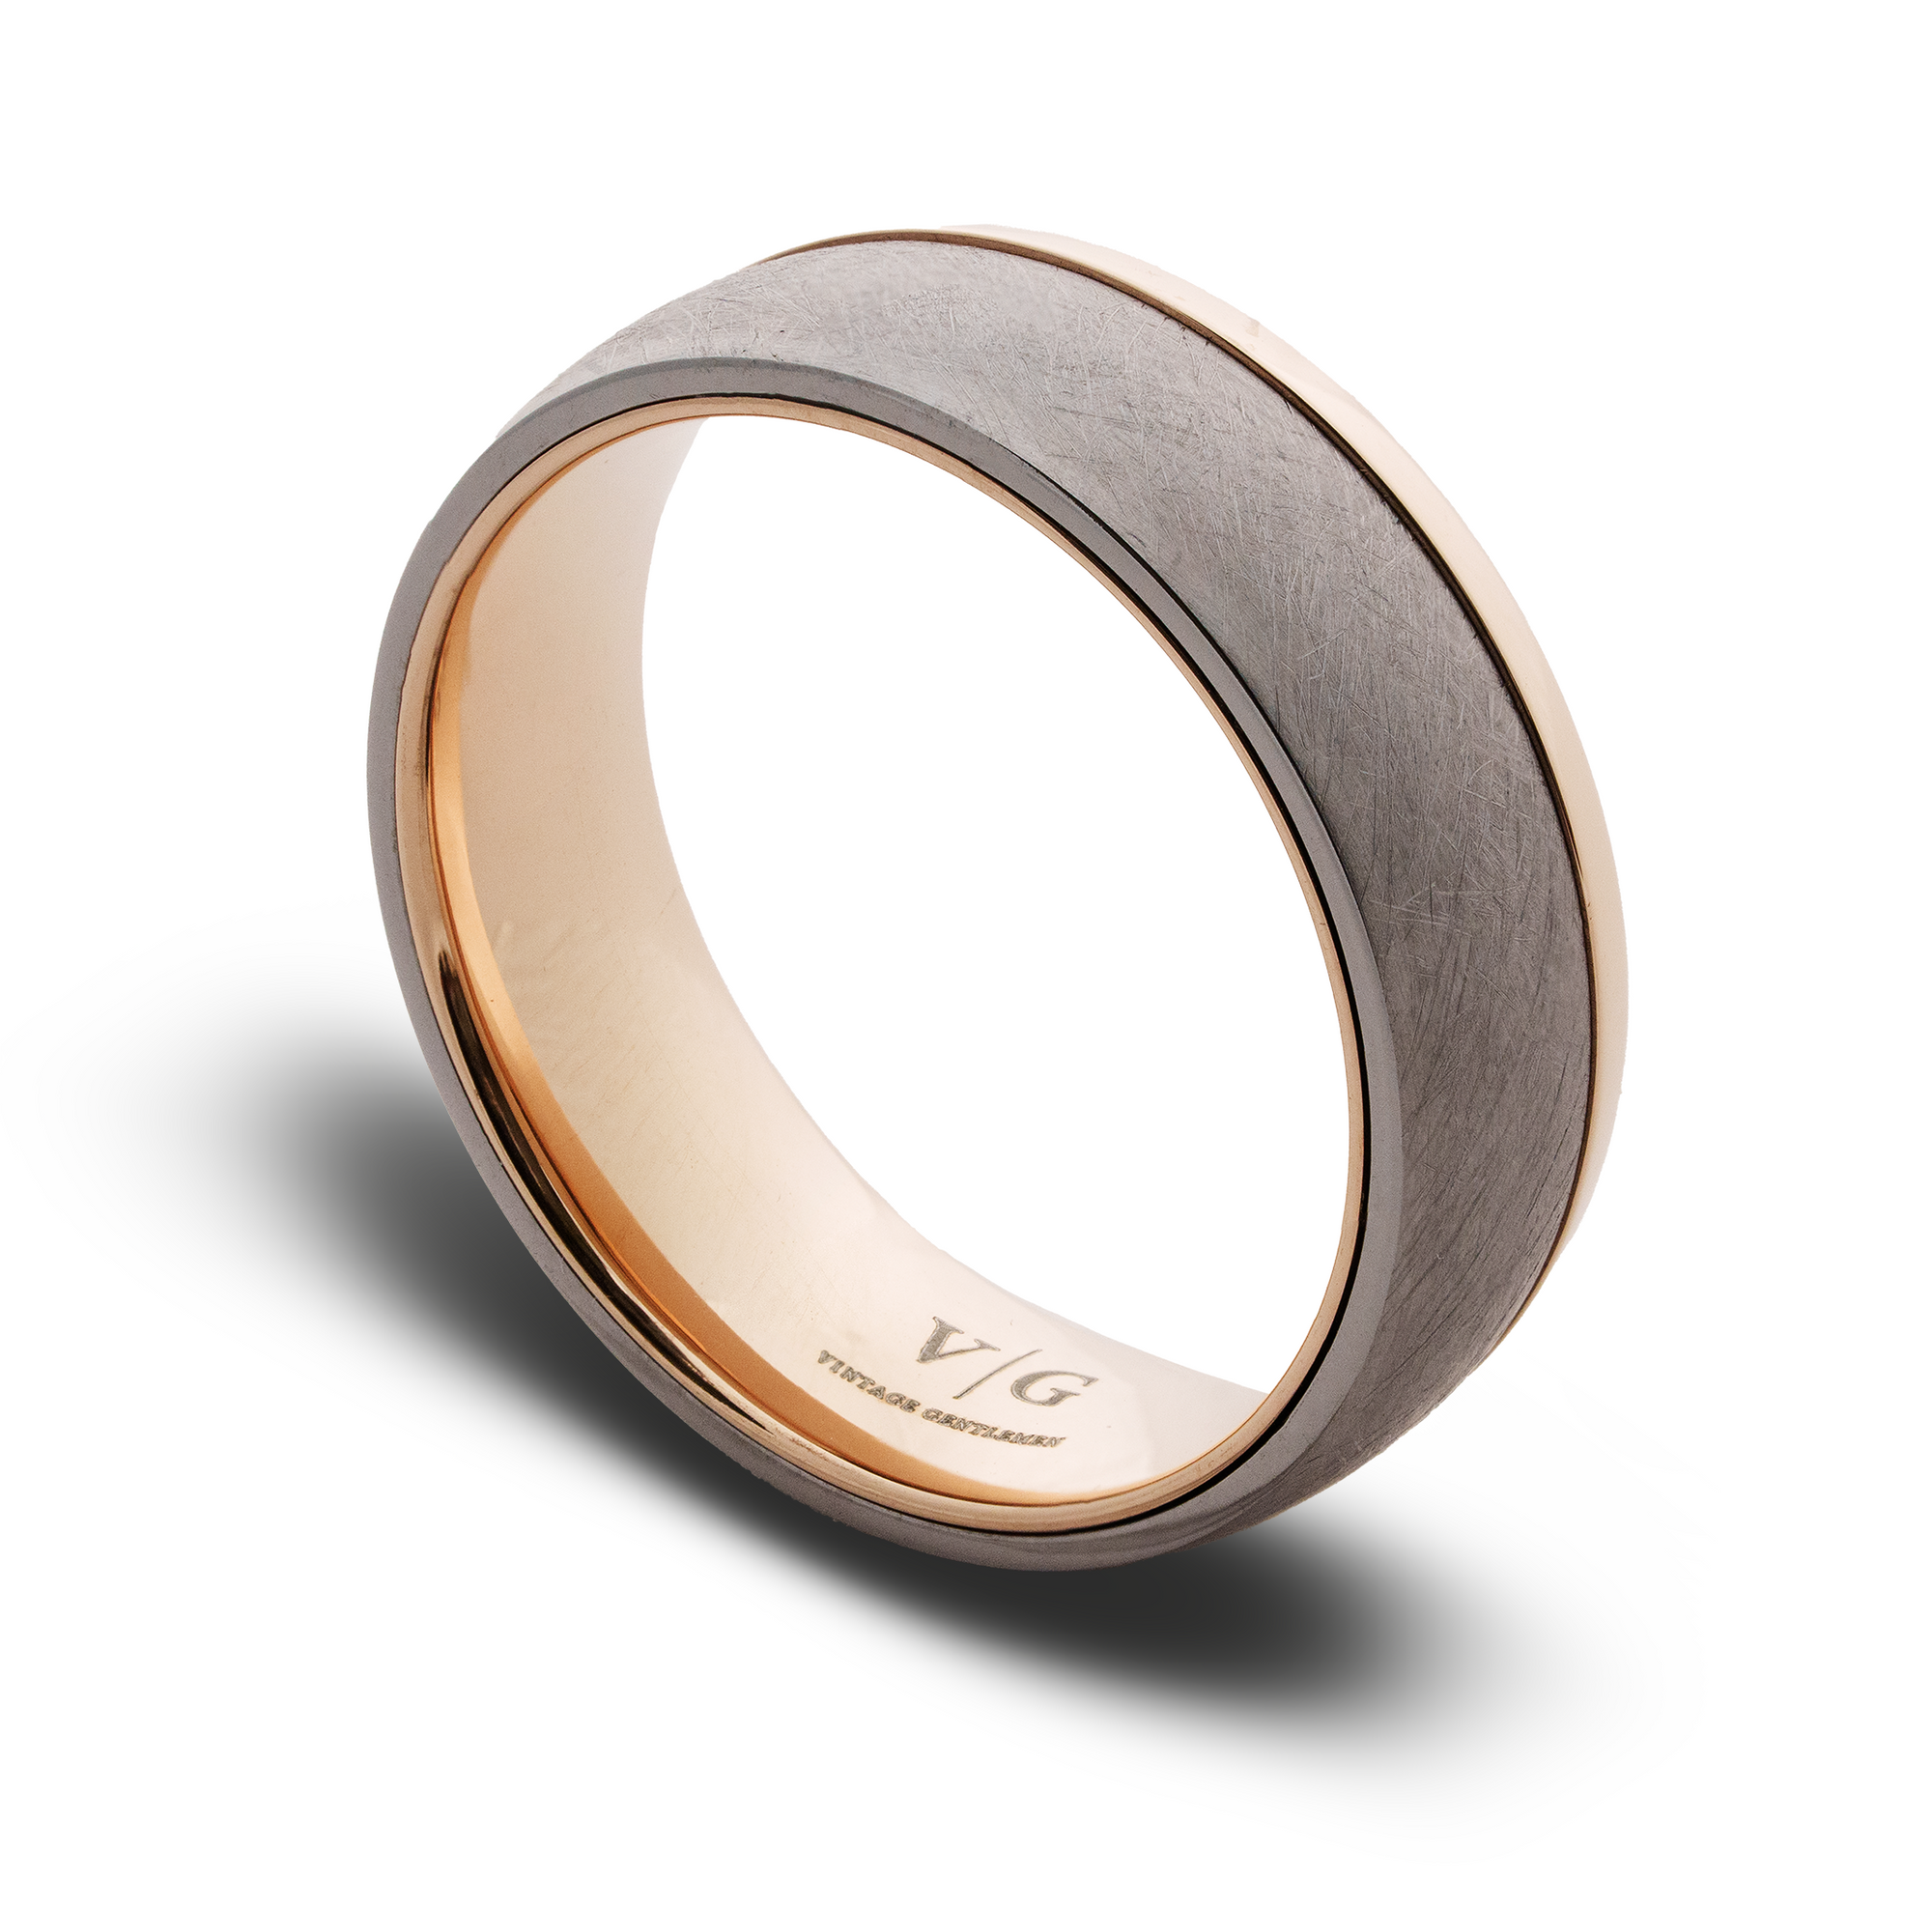 New: The “Atlas” Ring